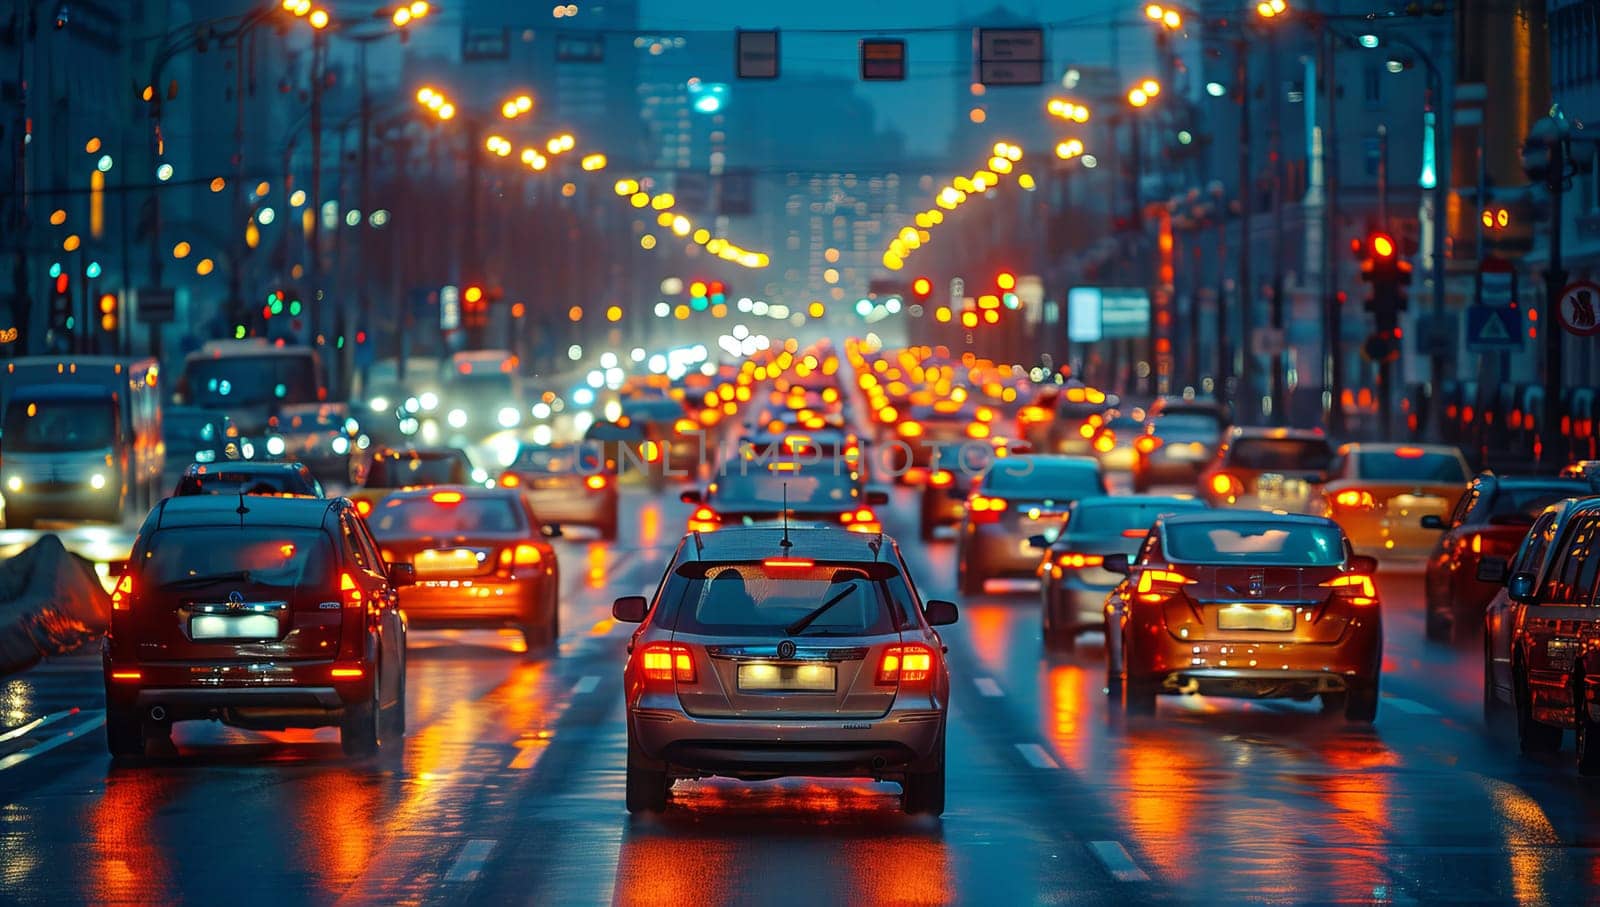 Nighttime traffic jam on a wet city street by ailike